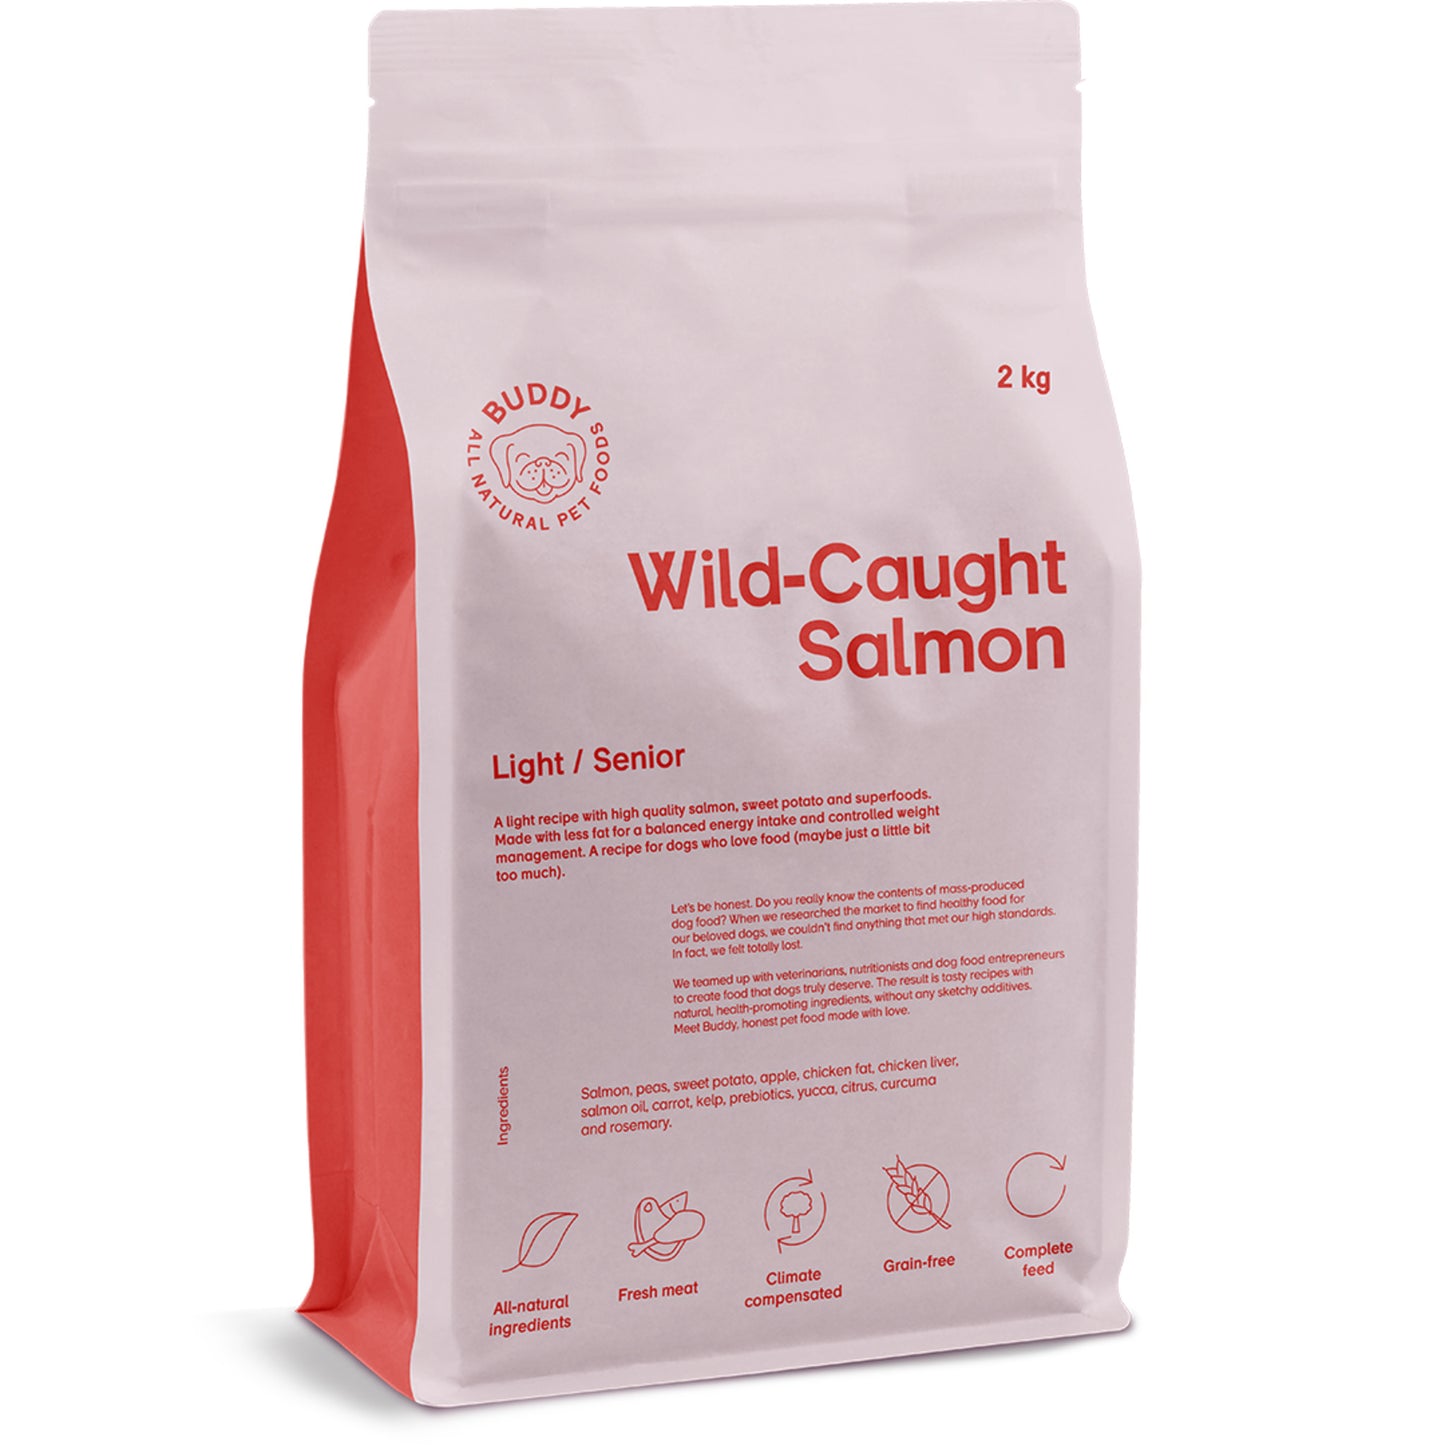 Buddy • Wild-Caught Salmon (Light/Senior) 2kg